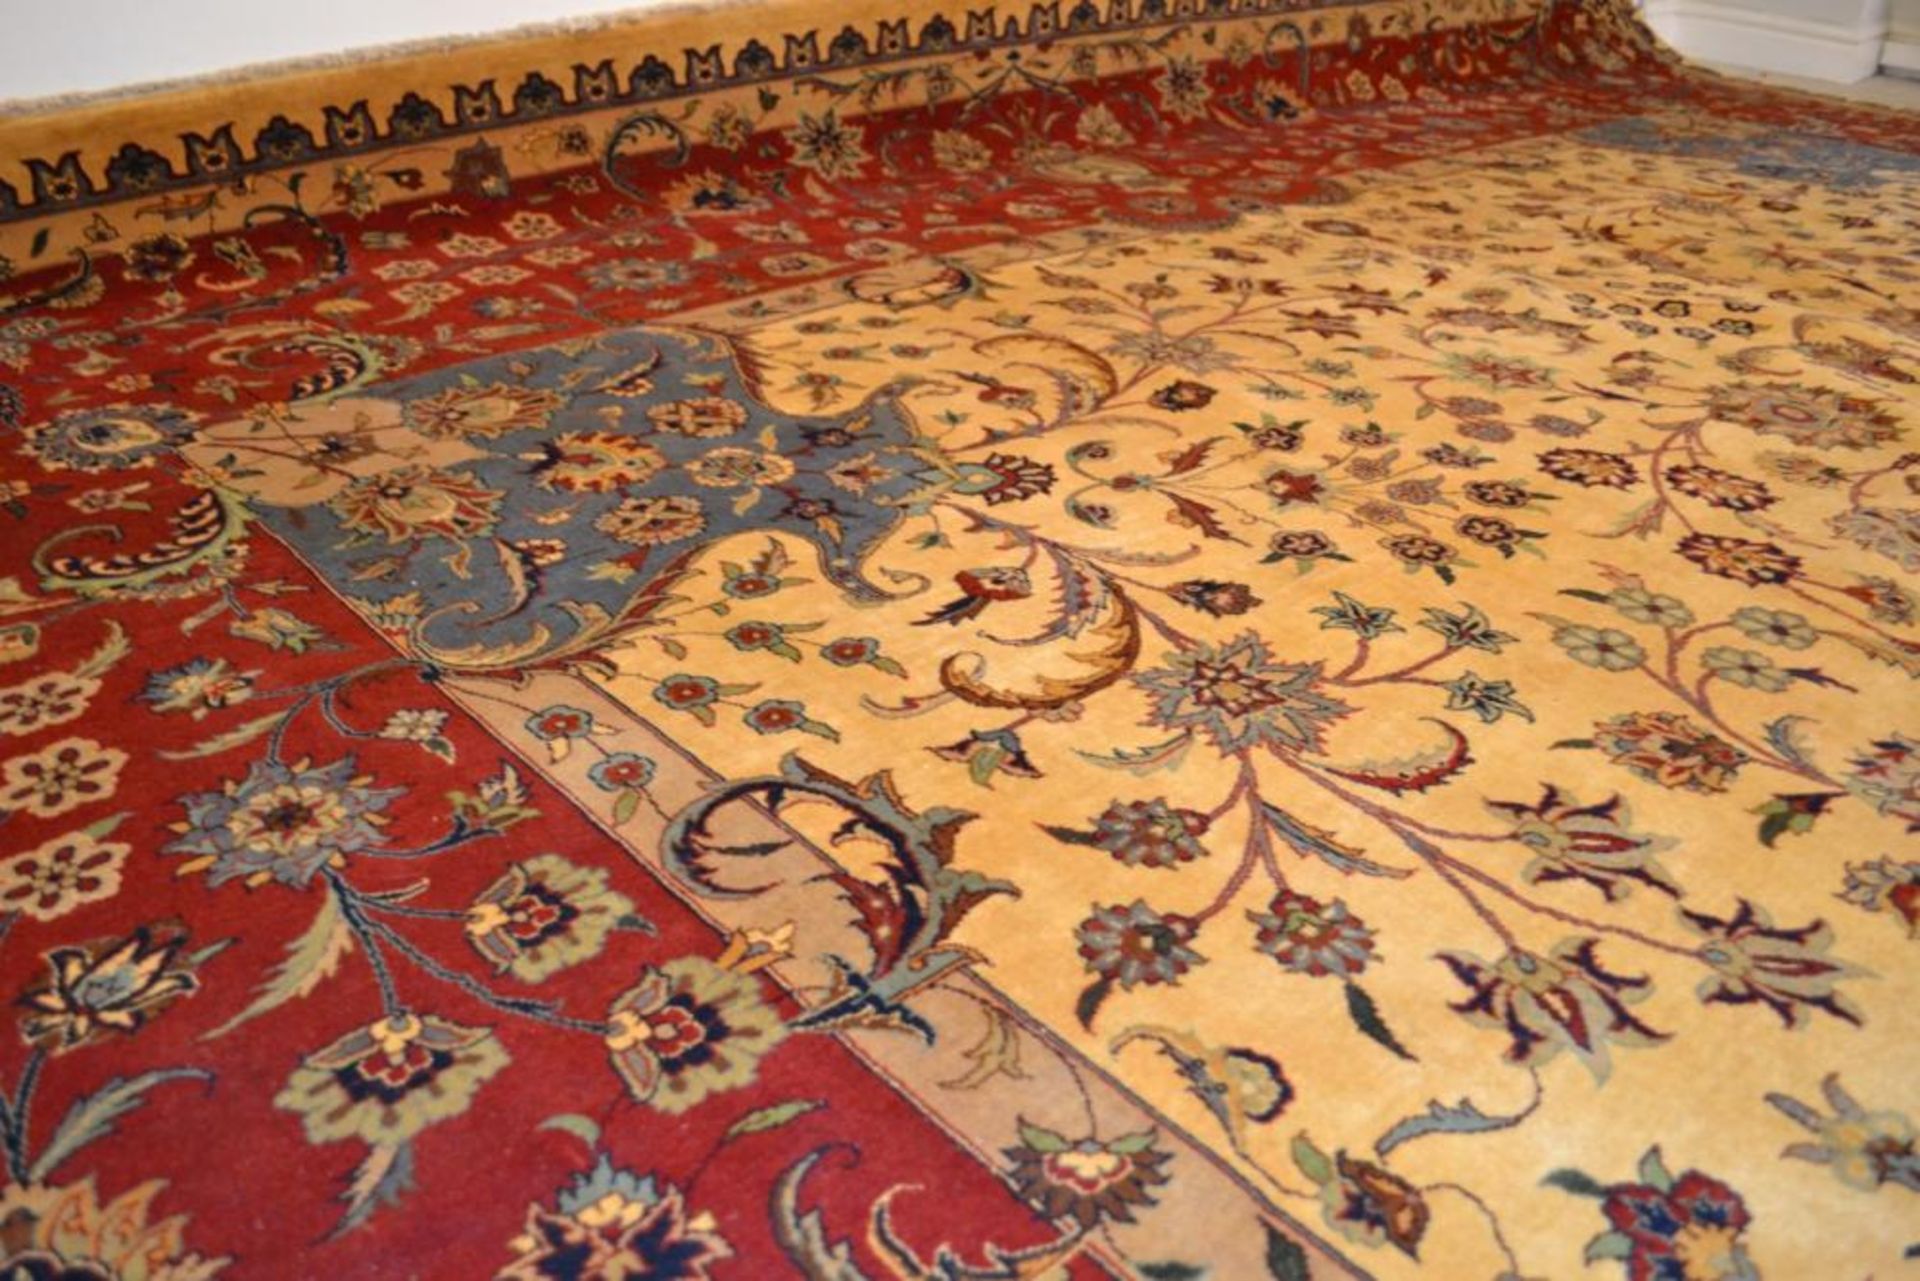 1 x Very Fine Top Quality Pakistan Tabriz Design Carpet - 320 Knot Count - Dimensions: 546x376cm - N - Image 28 of 31